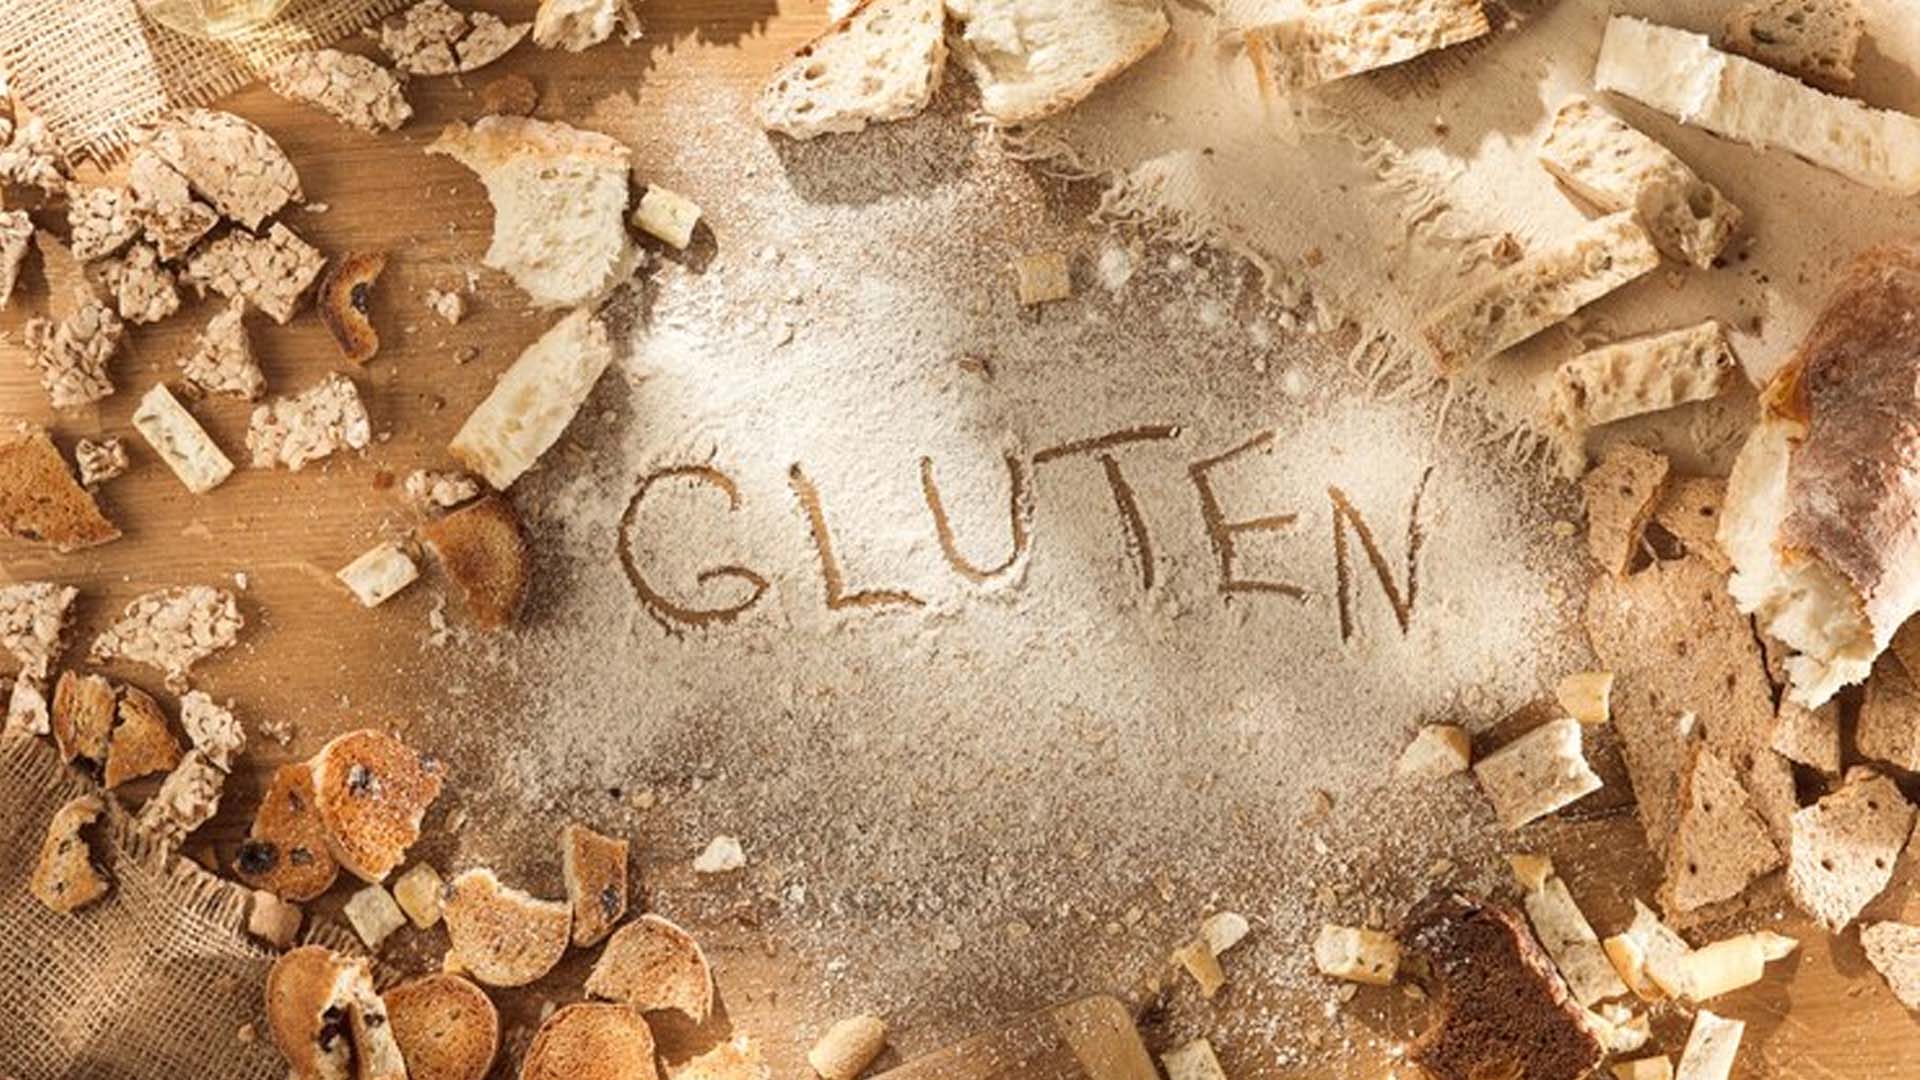 Gluten written with hand on flour